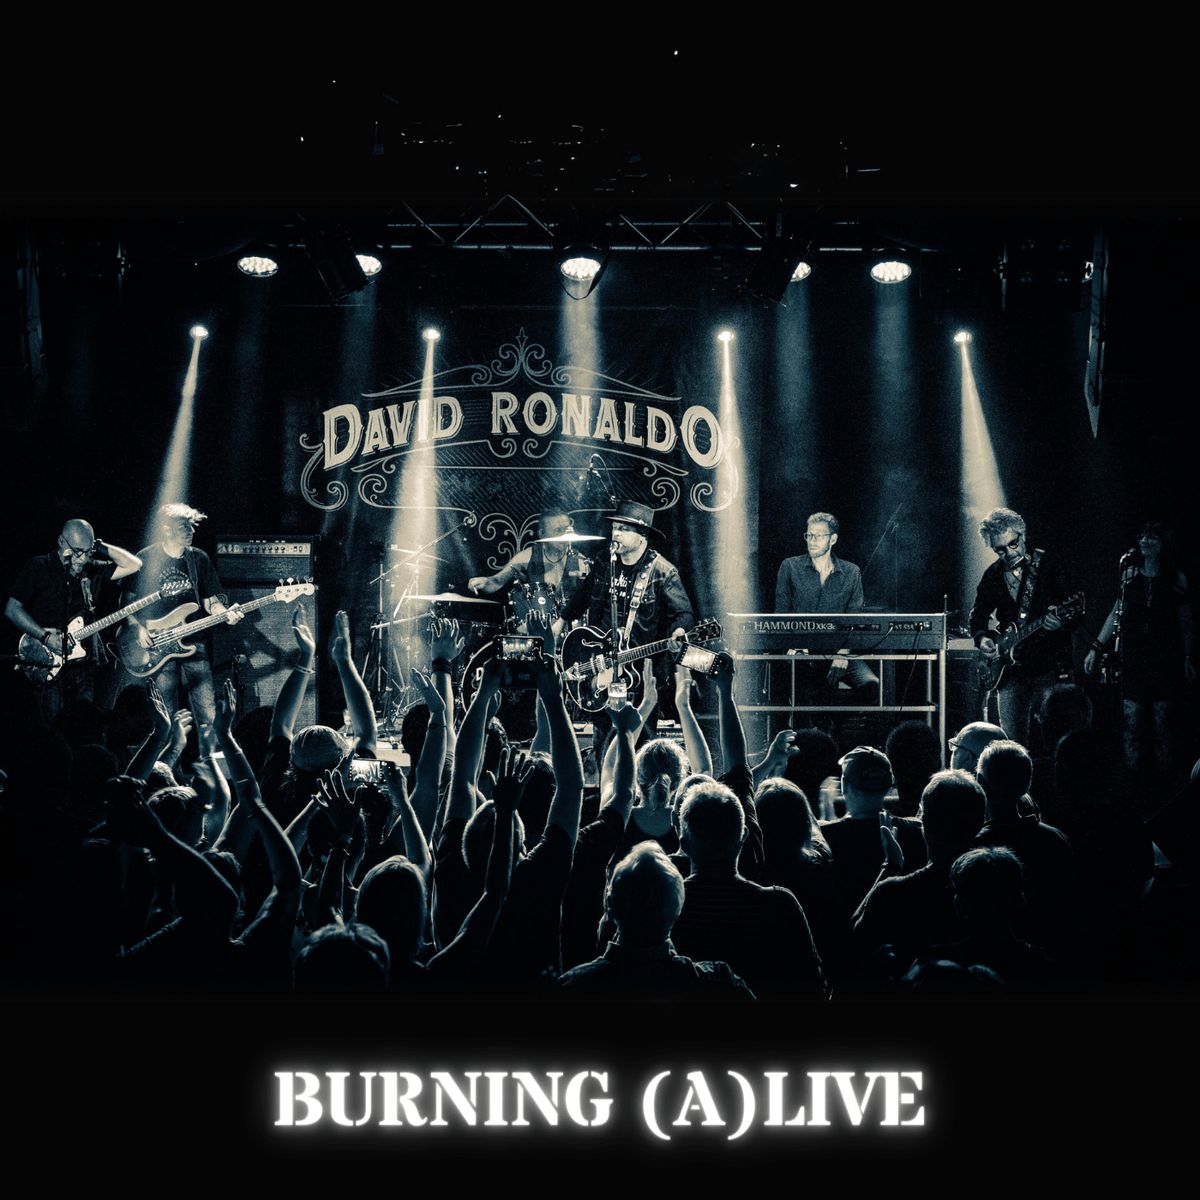 Burning (A)live